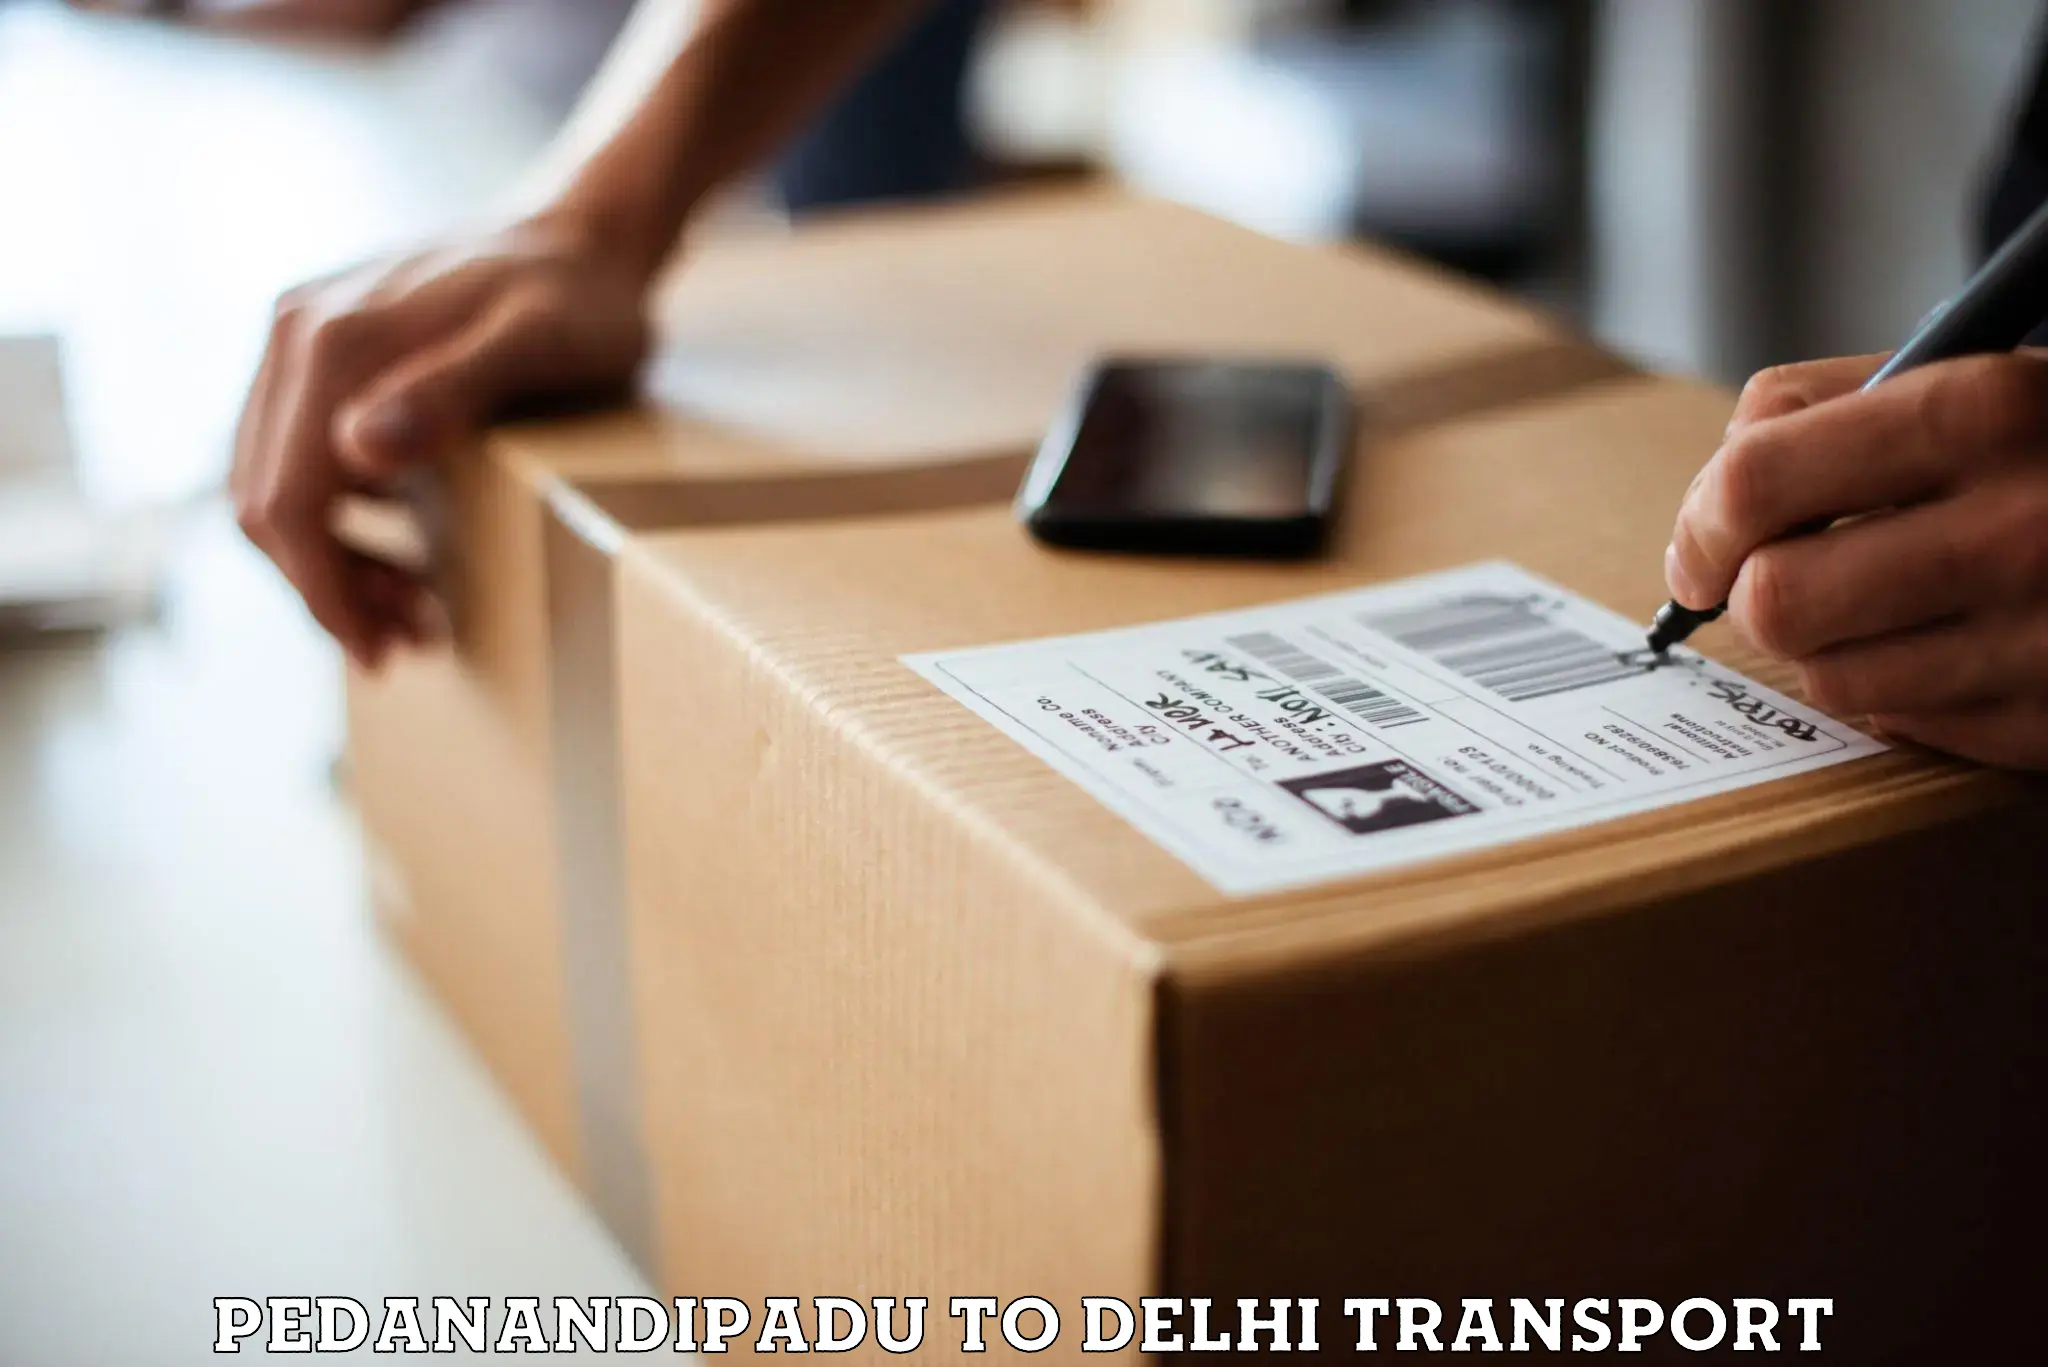 Transport in sharing Pedanandipadu to East Delhi